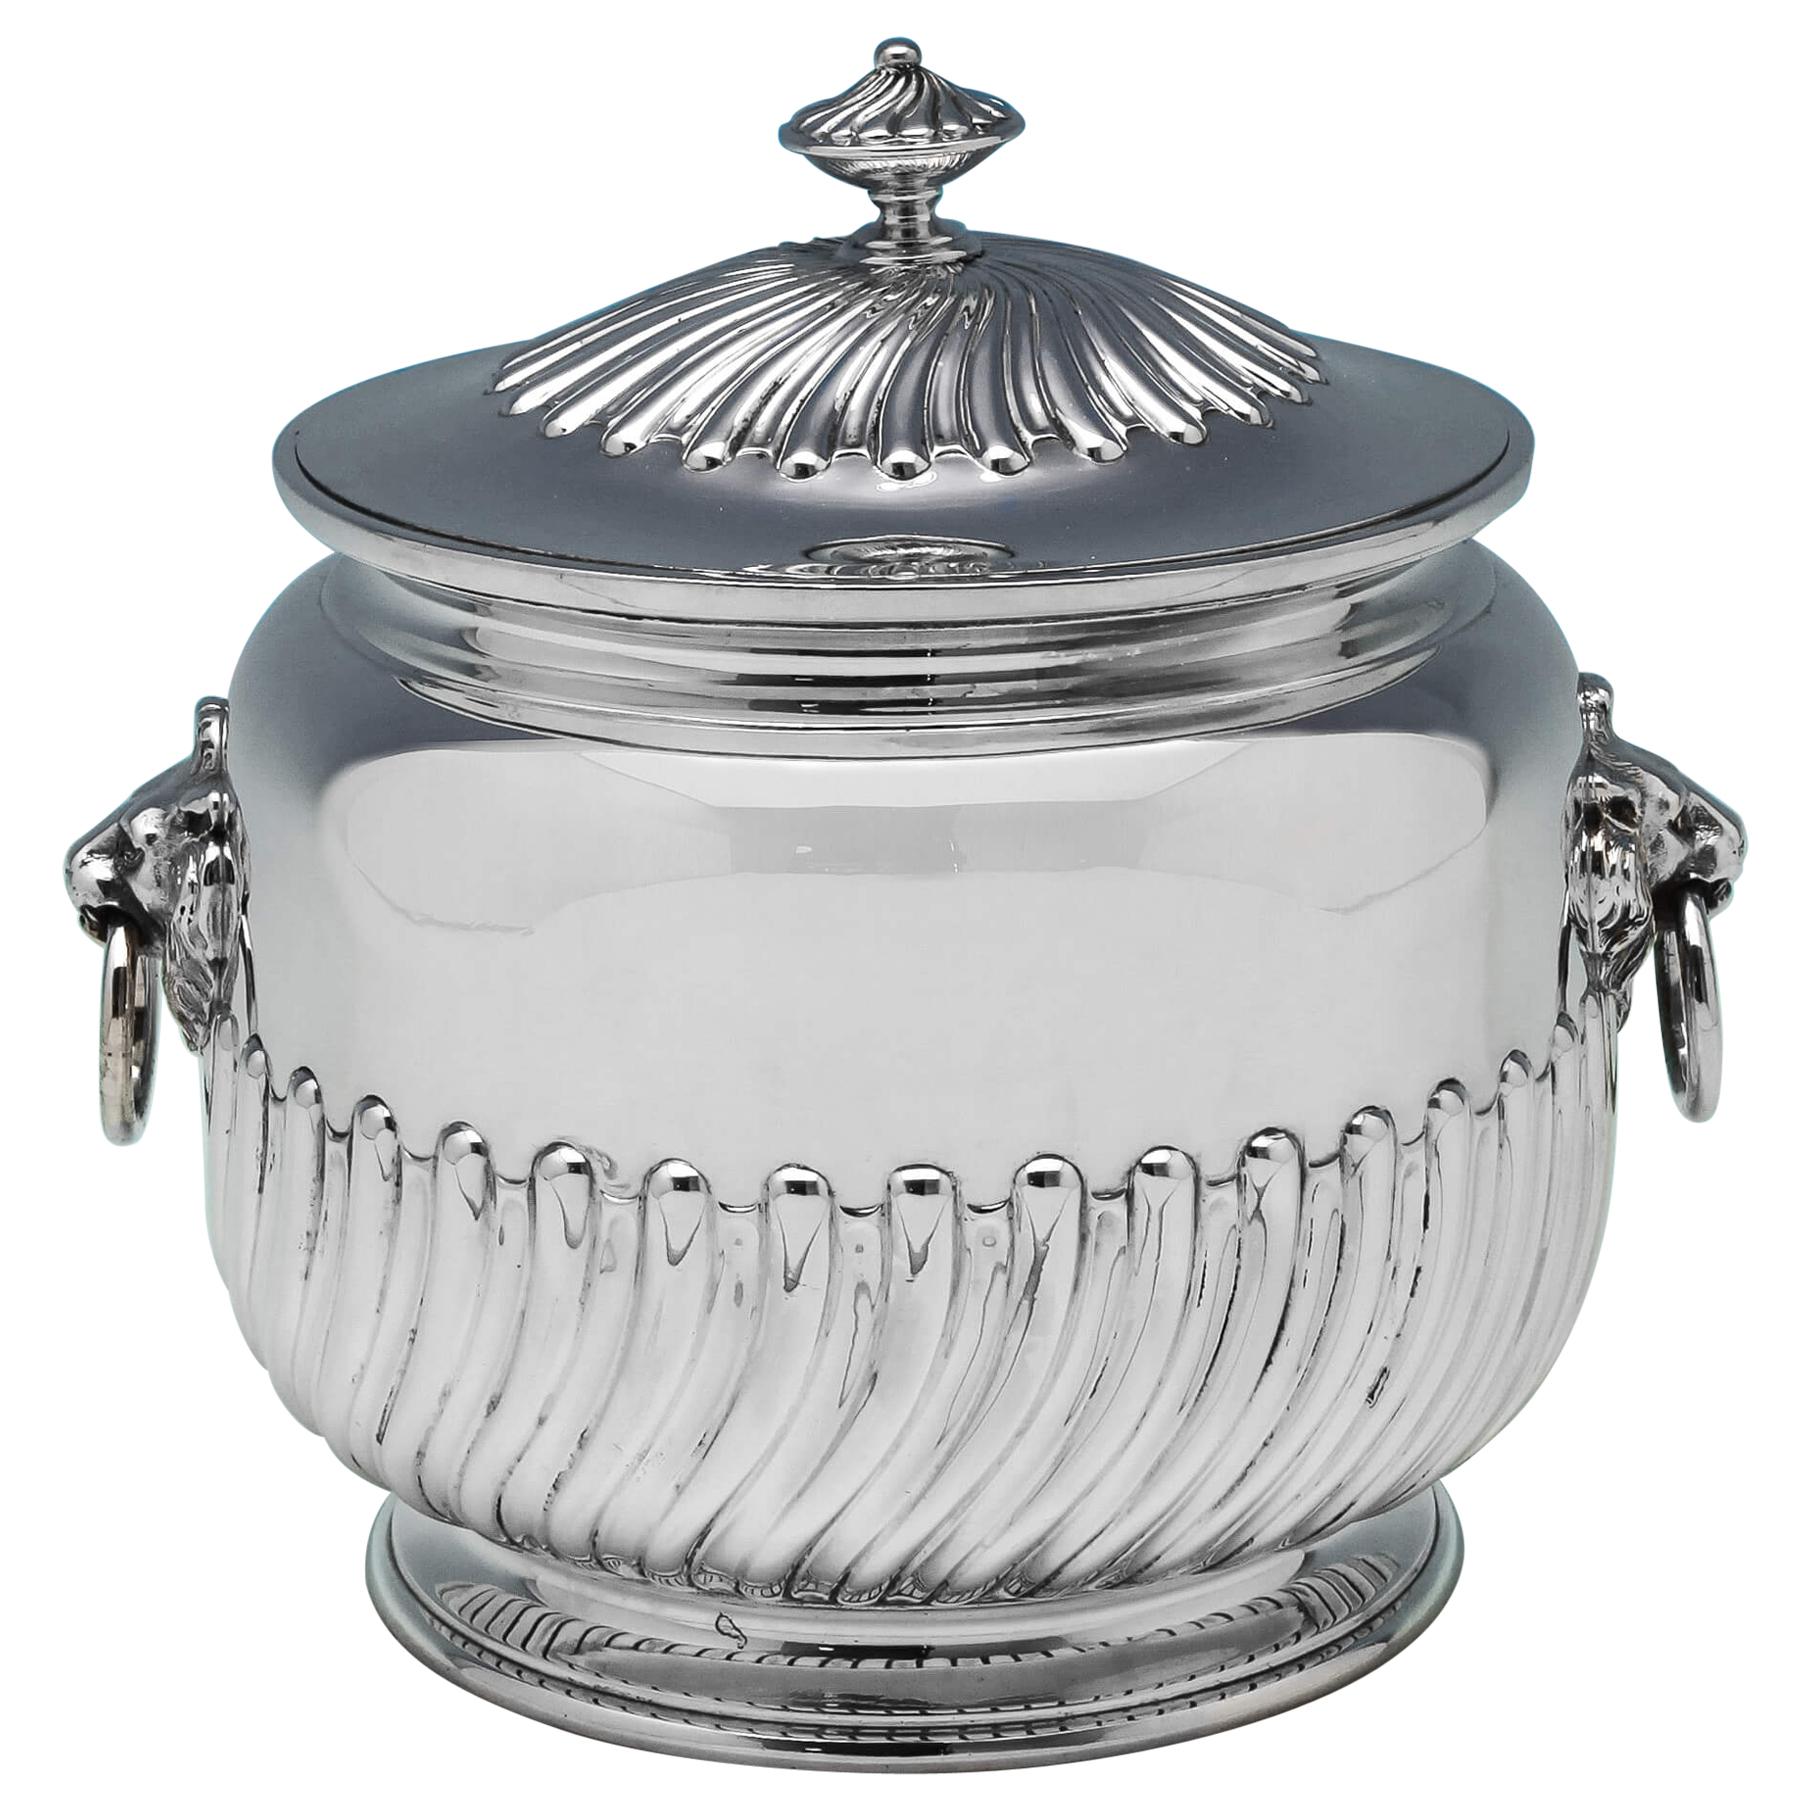 'Queen Anne' Design Victorian Antique Sterling Silver Biscuit Box by Barnards